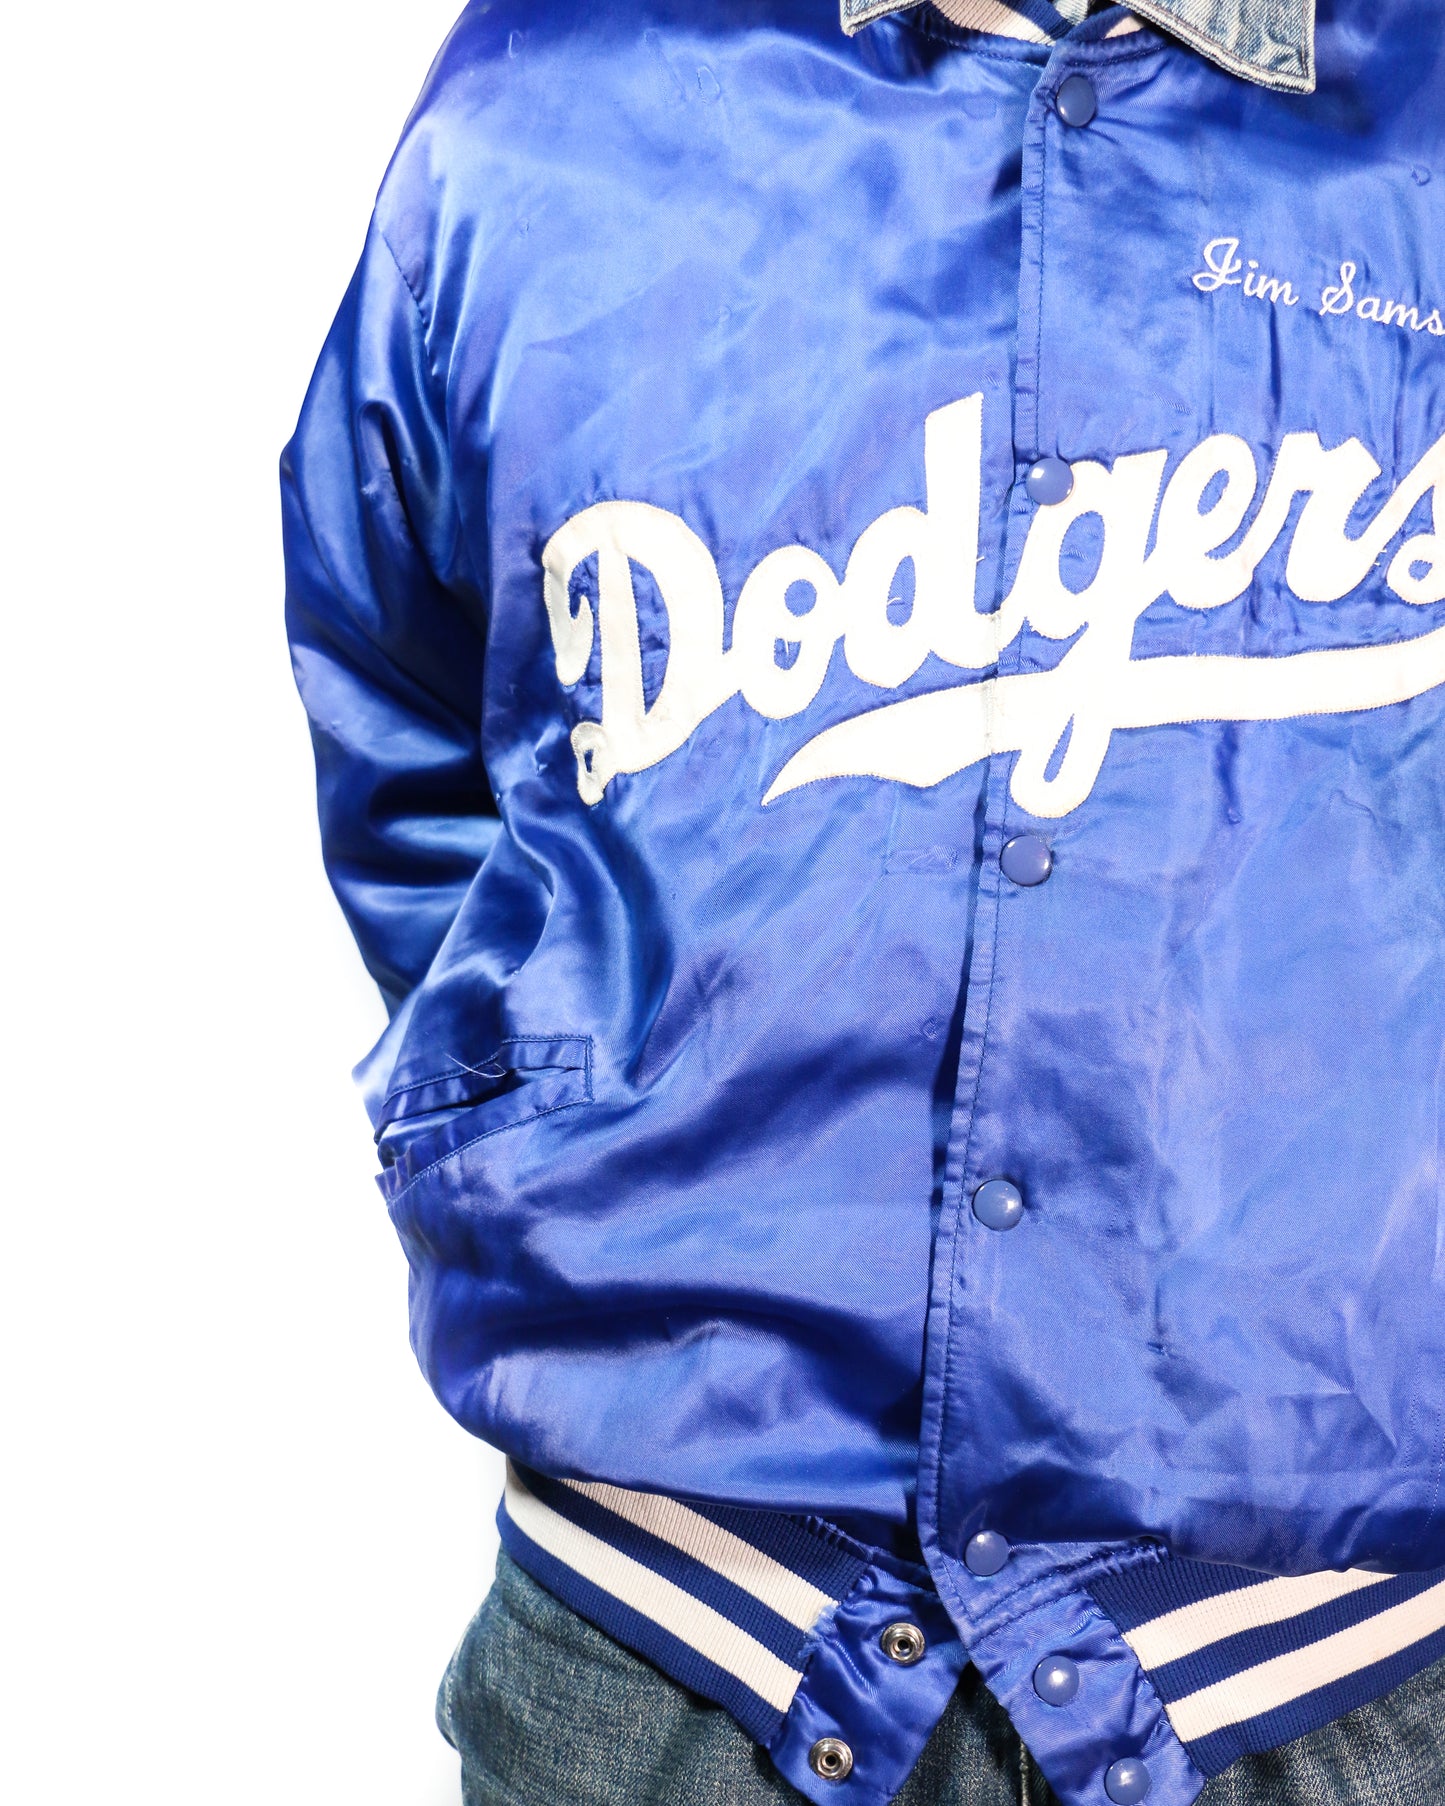 USED " Dodgers STADIUM SATIN JACKET Made in USA  / BLUE / 表記 XL